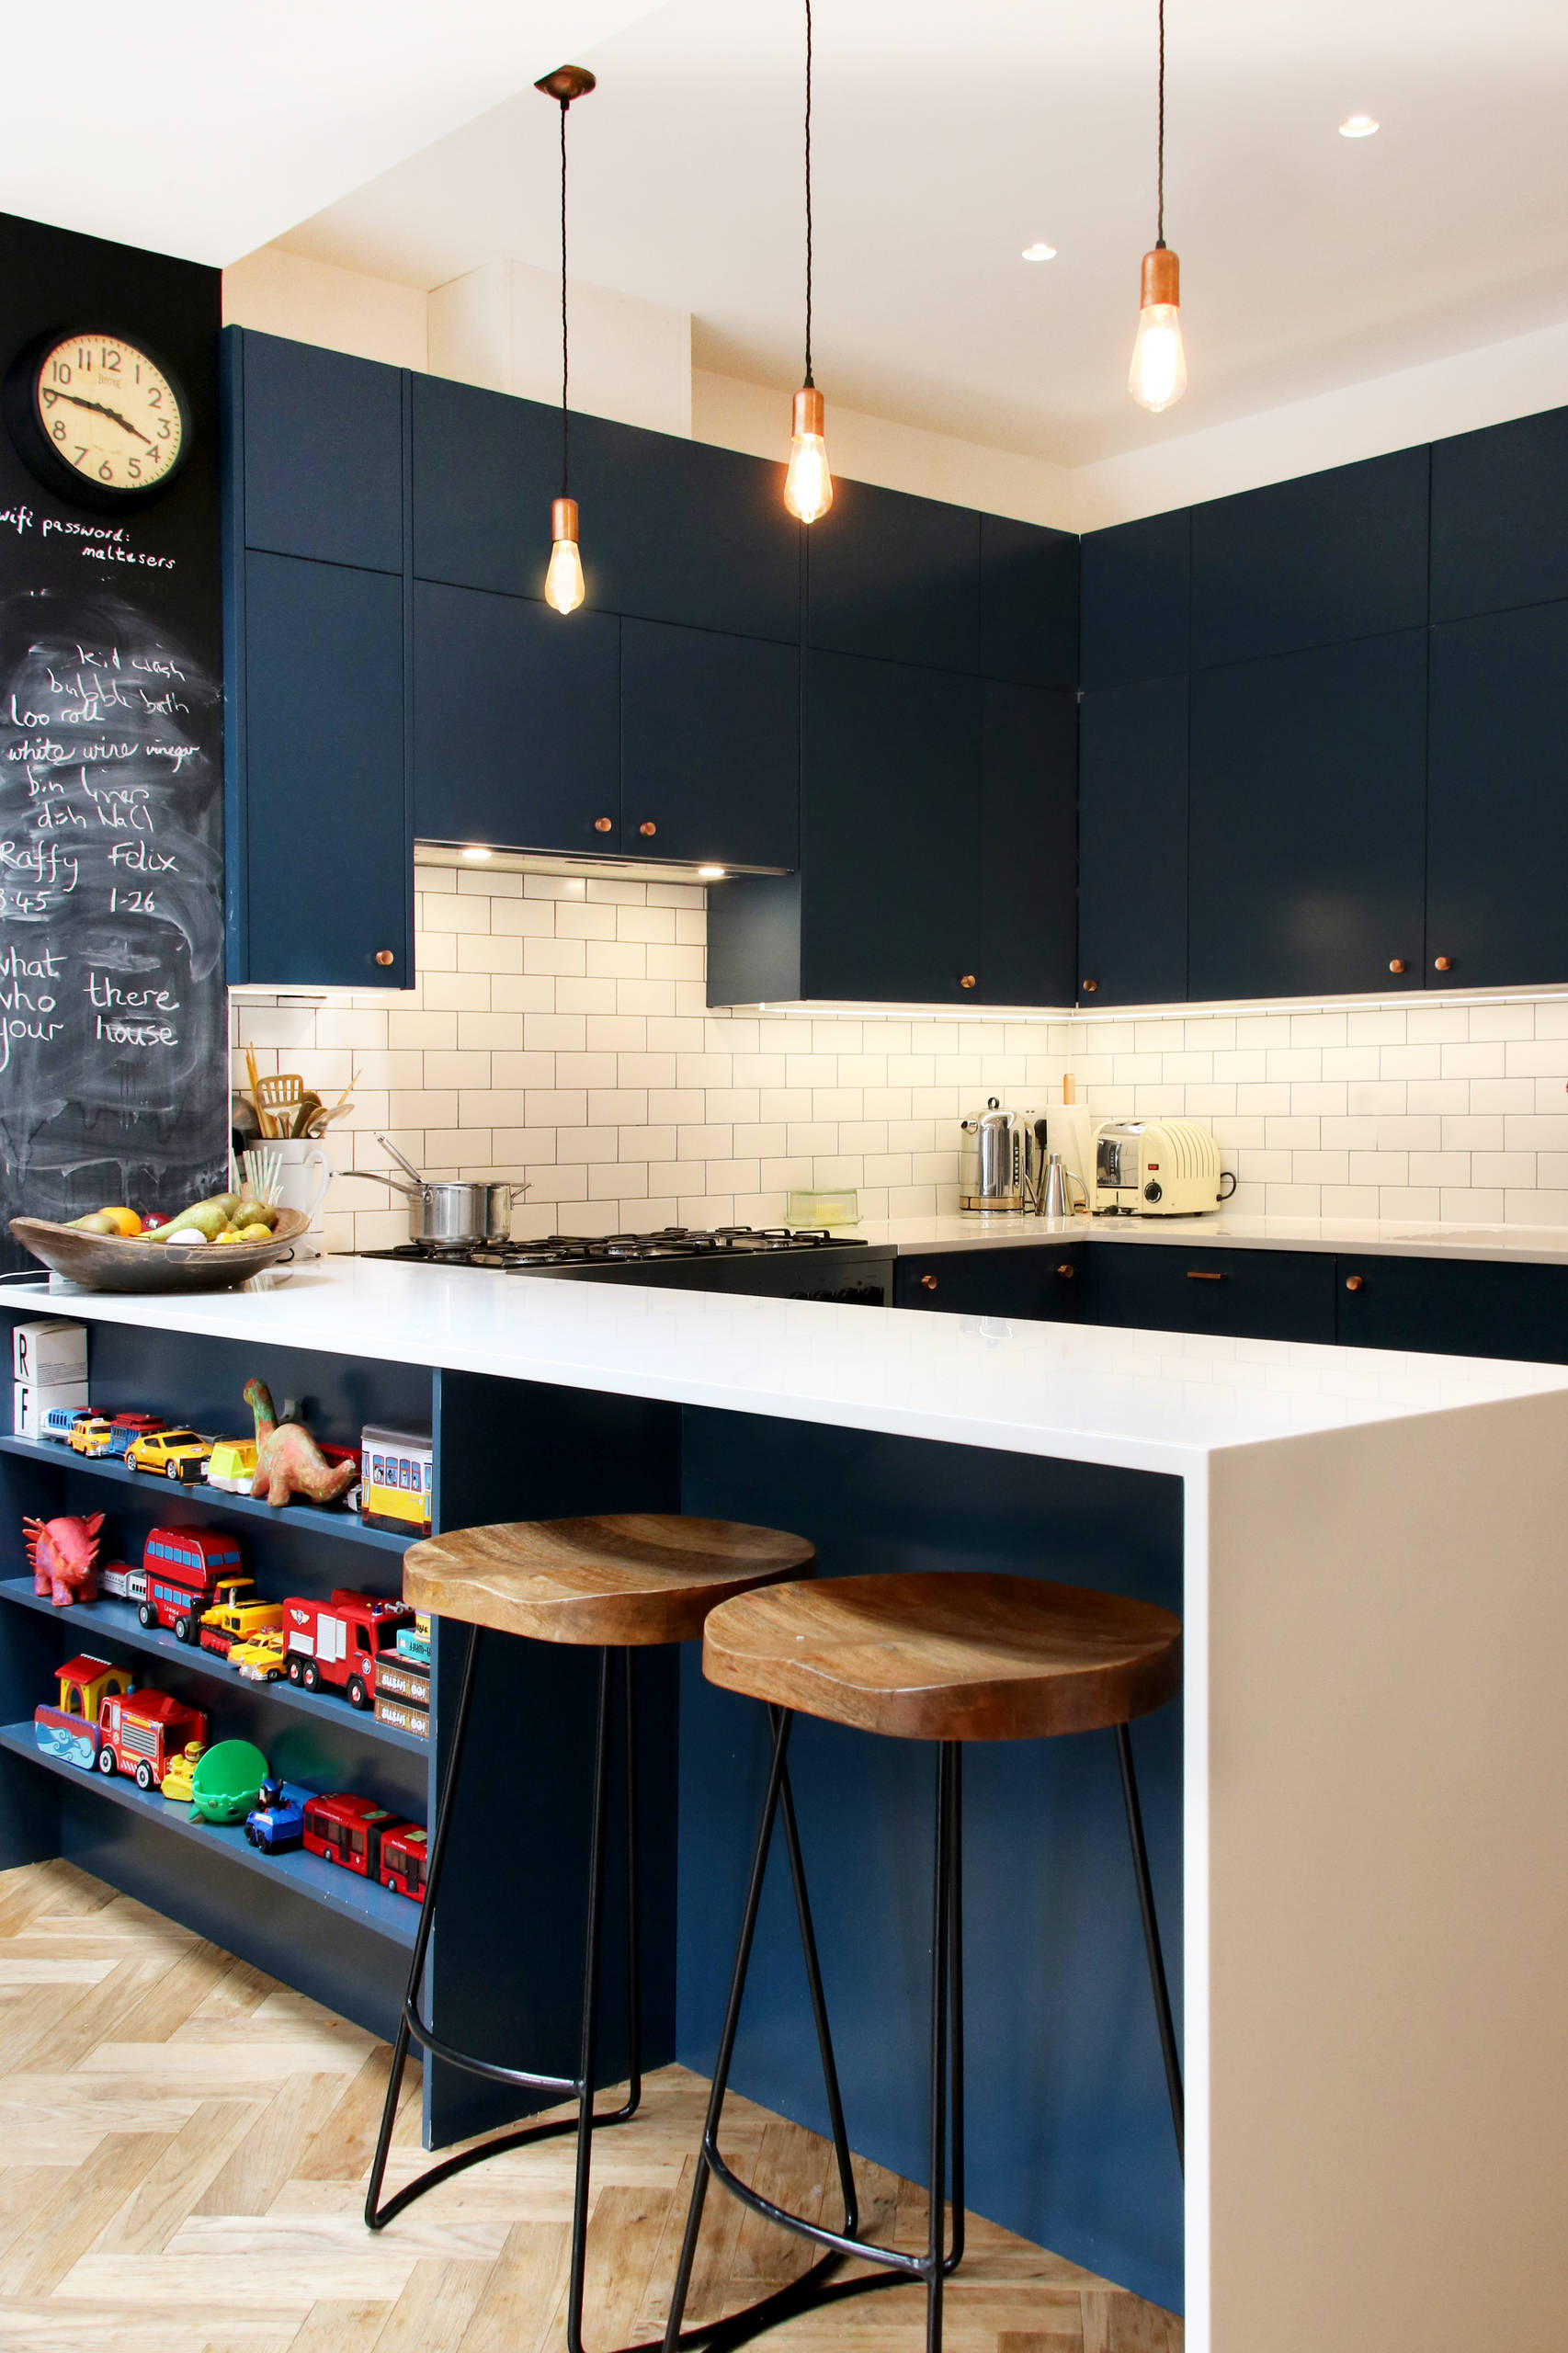 5 Kitchen Island Storage Ideas That Maximize Every Inch - SemiStories